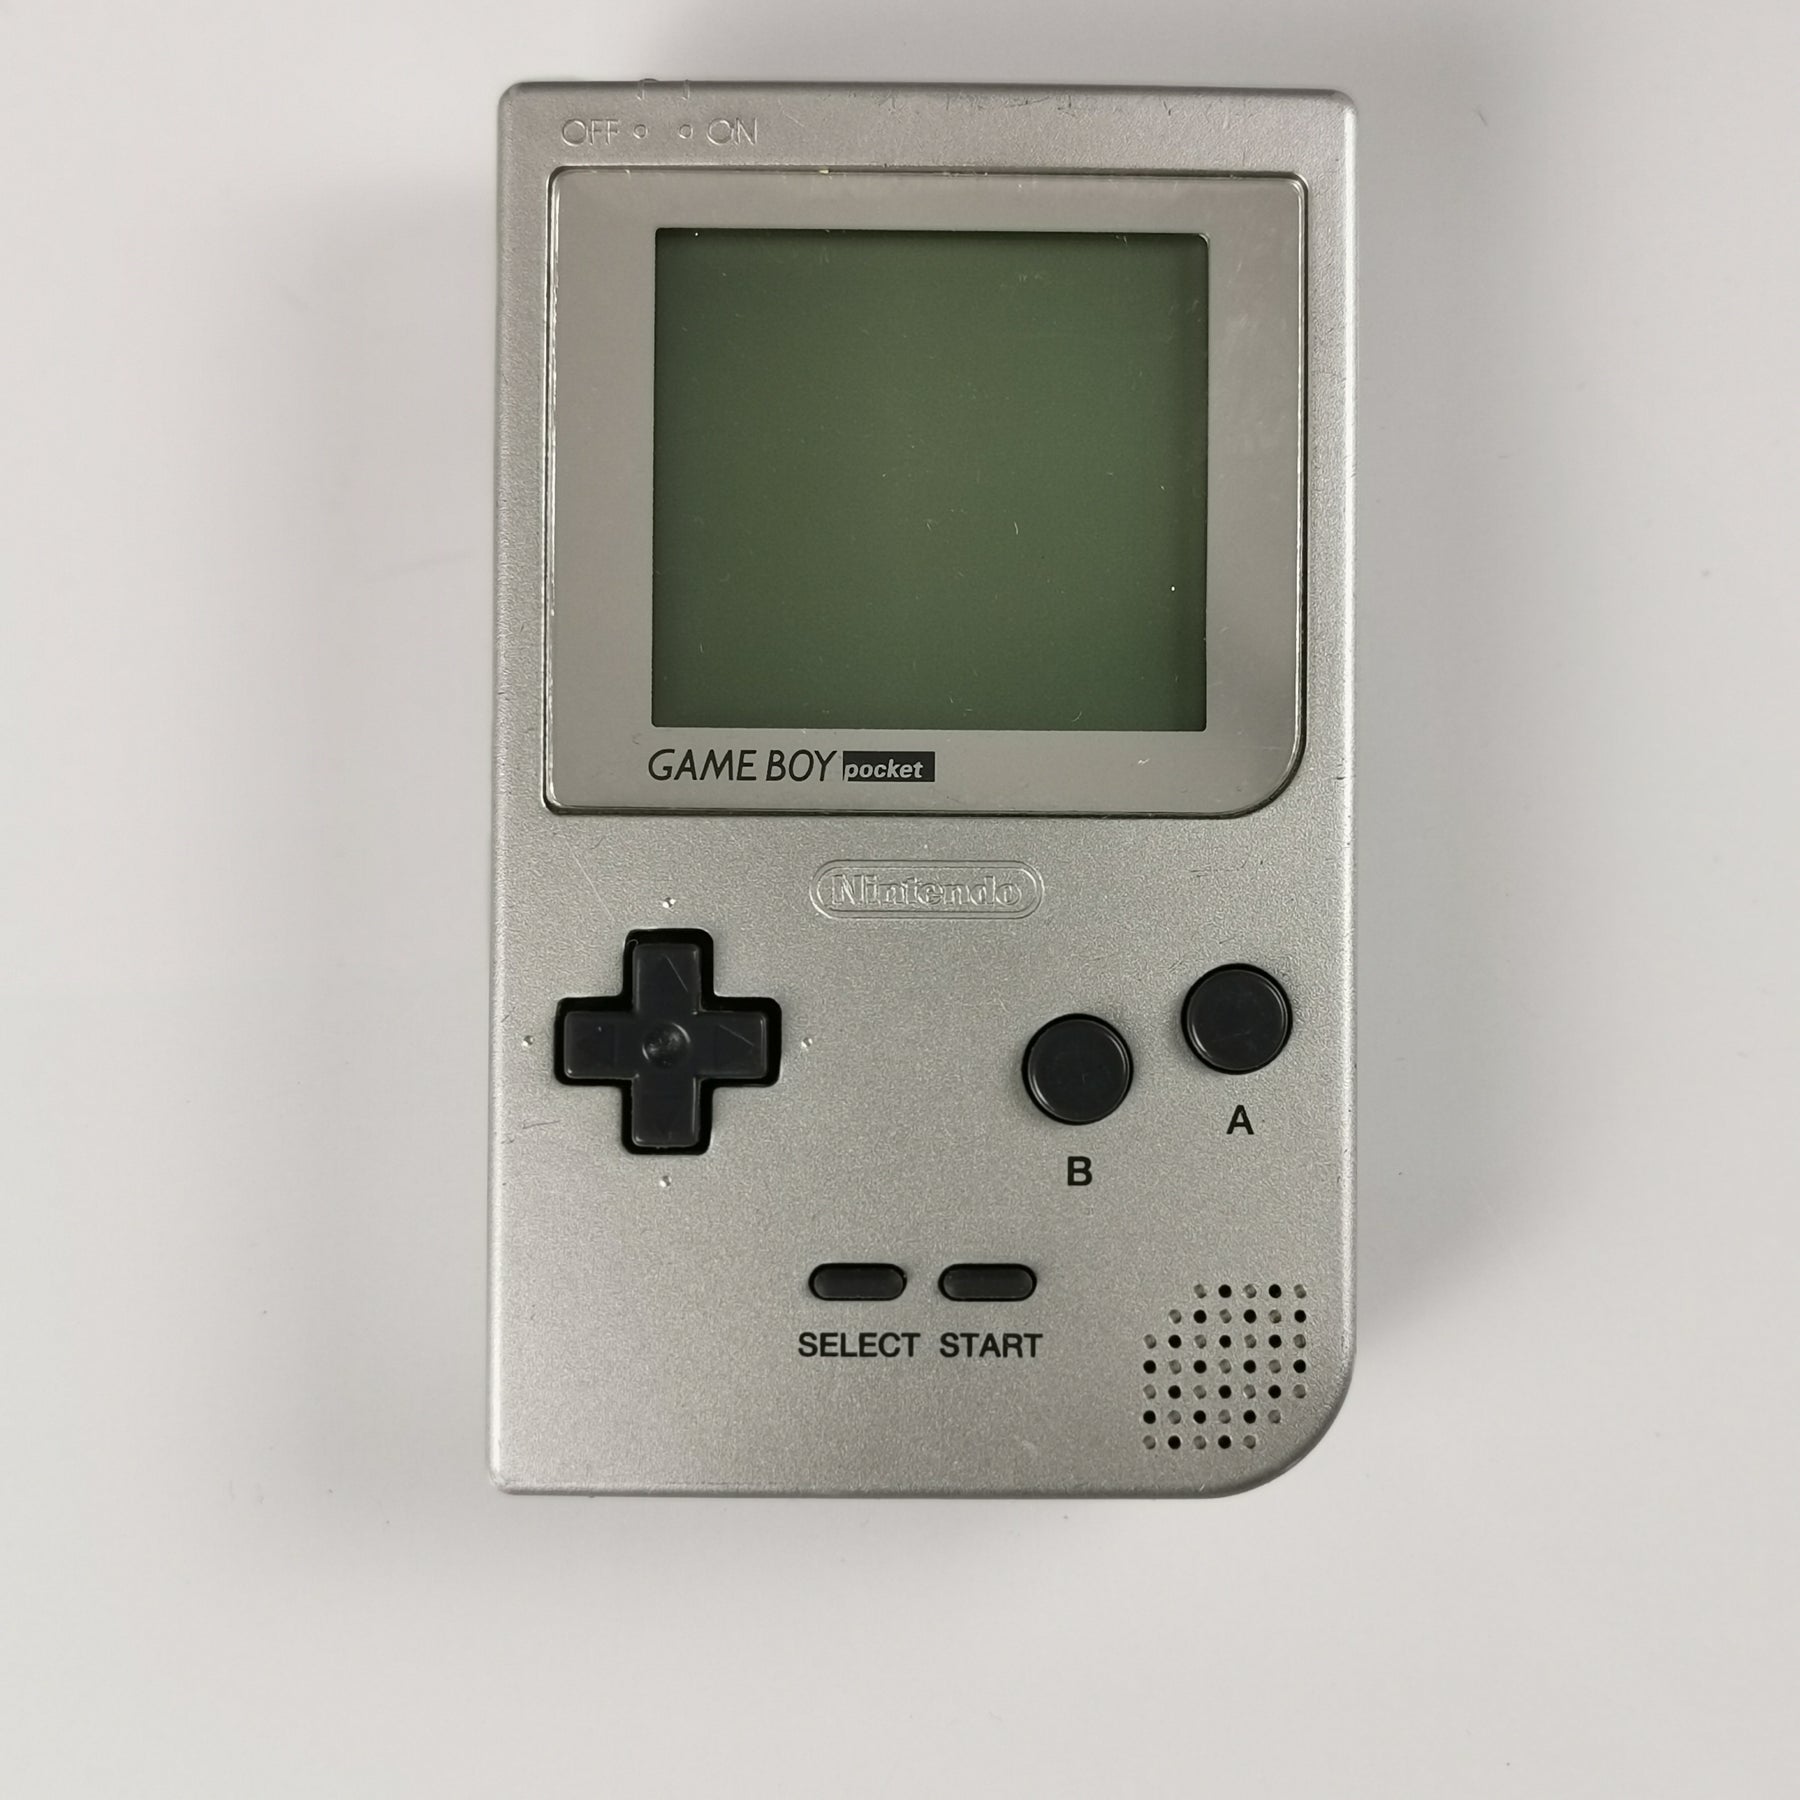 Game Boy Pocket Geraet silber [Akzeptabel]